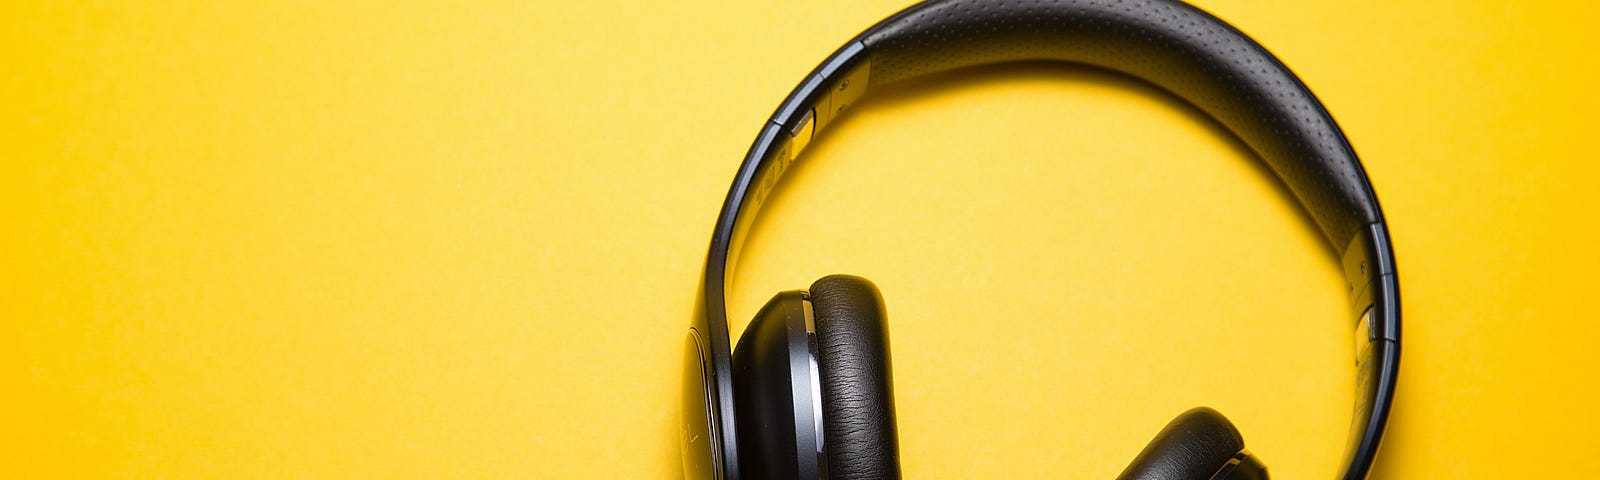 Black headphones on a yellow background